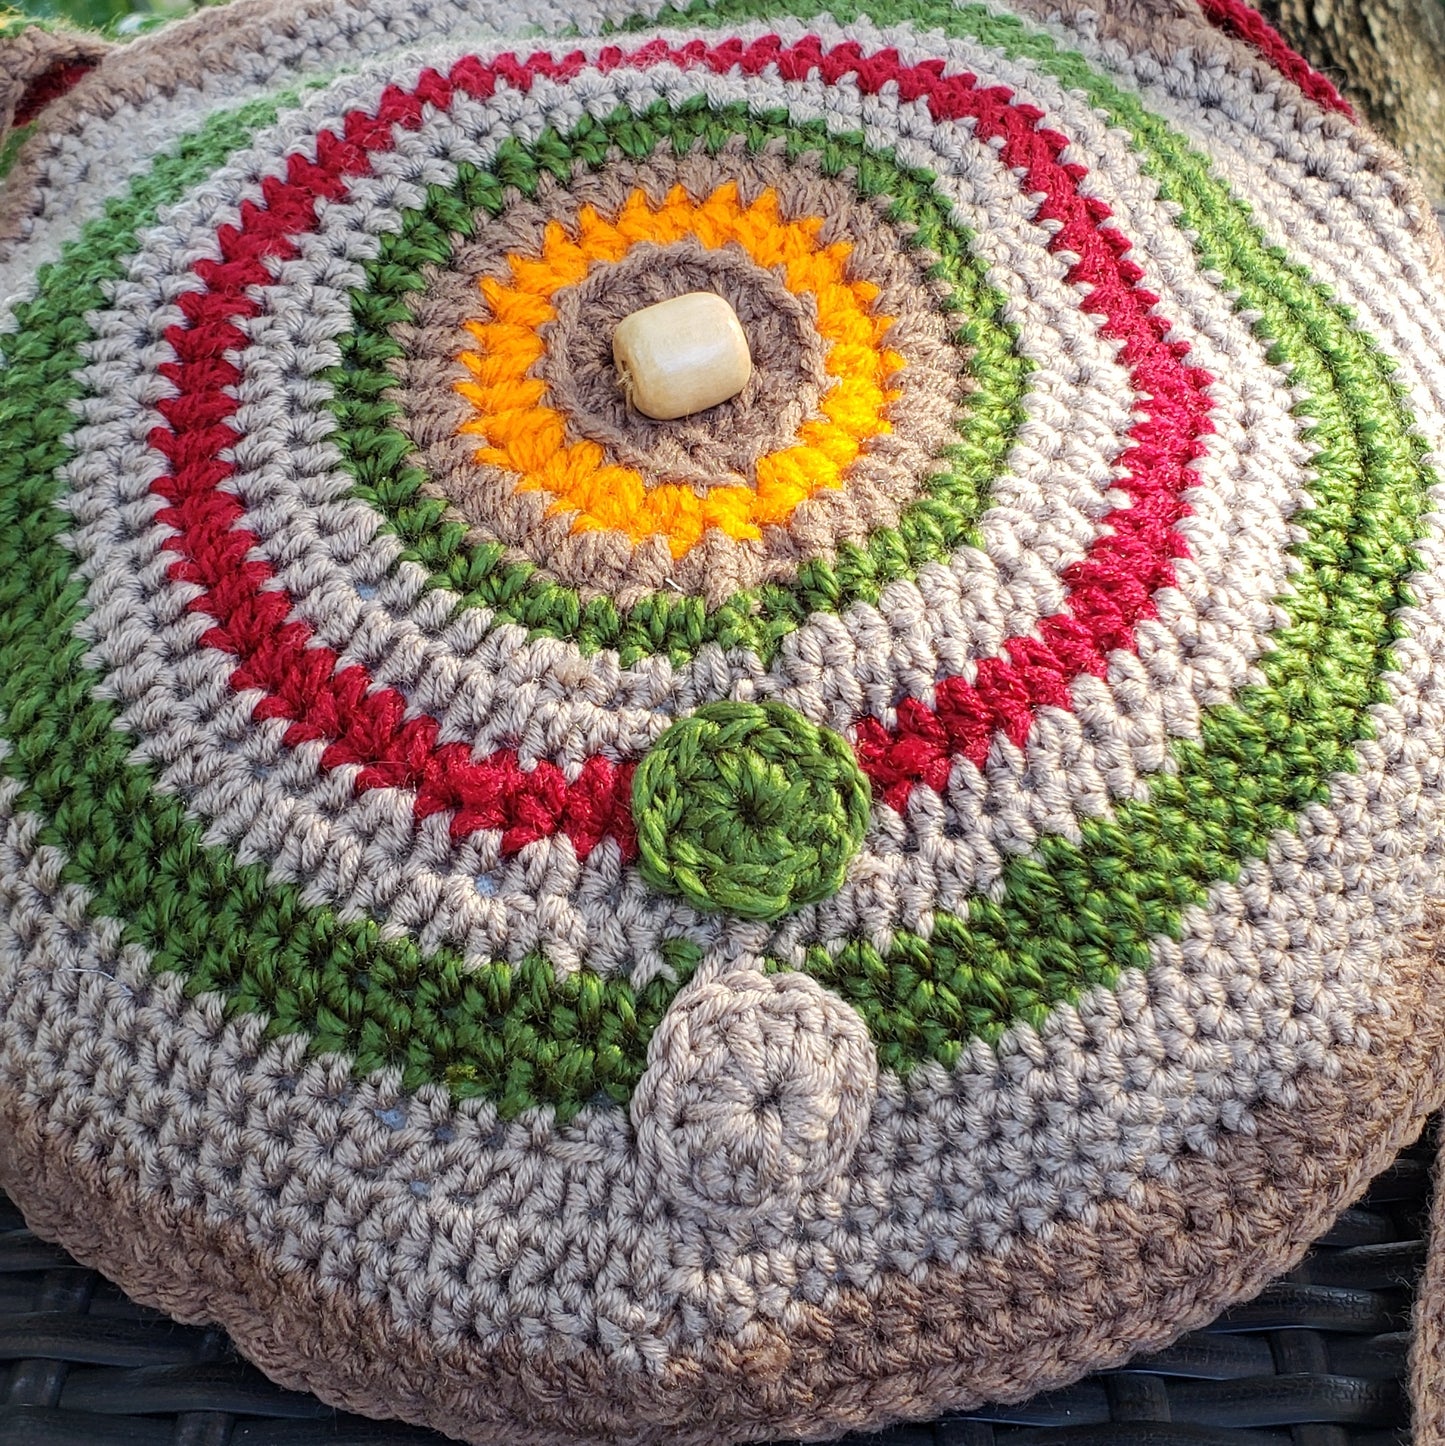 Autumn Crochet Round Boho Bag